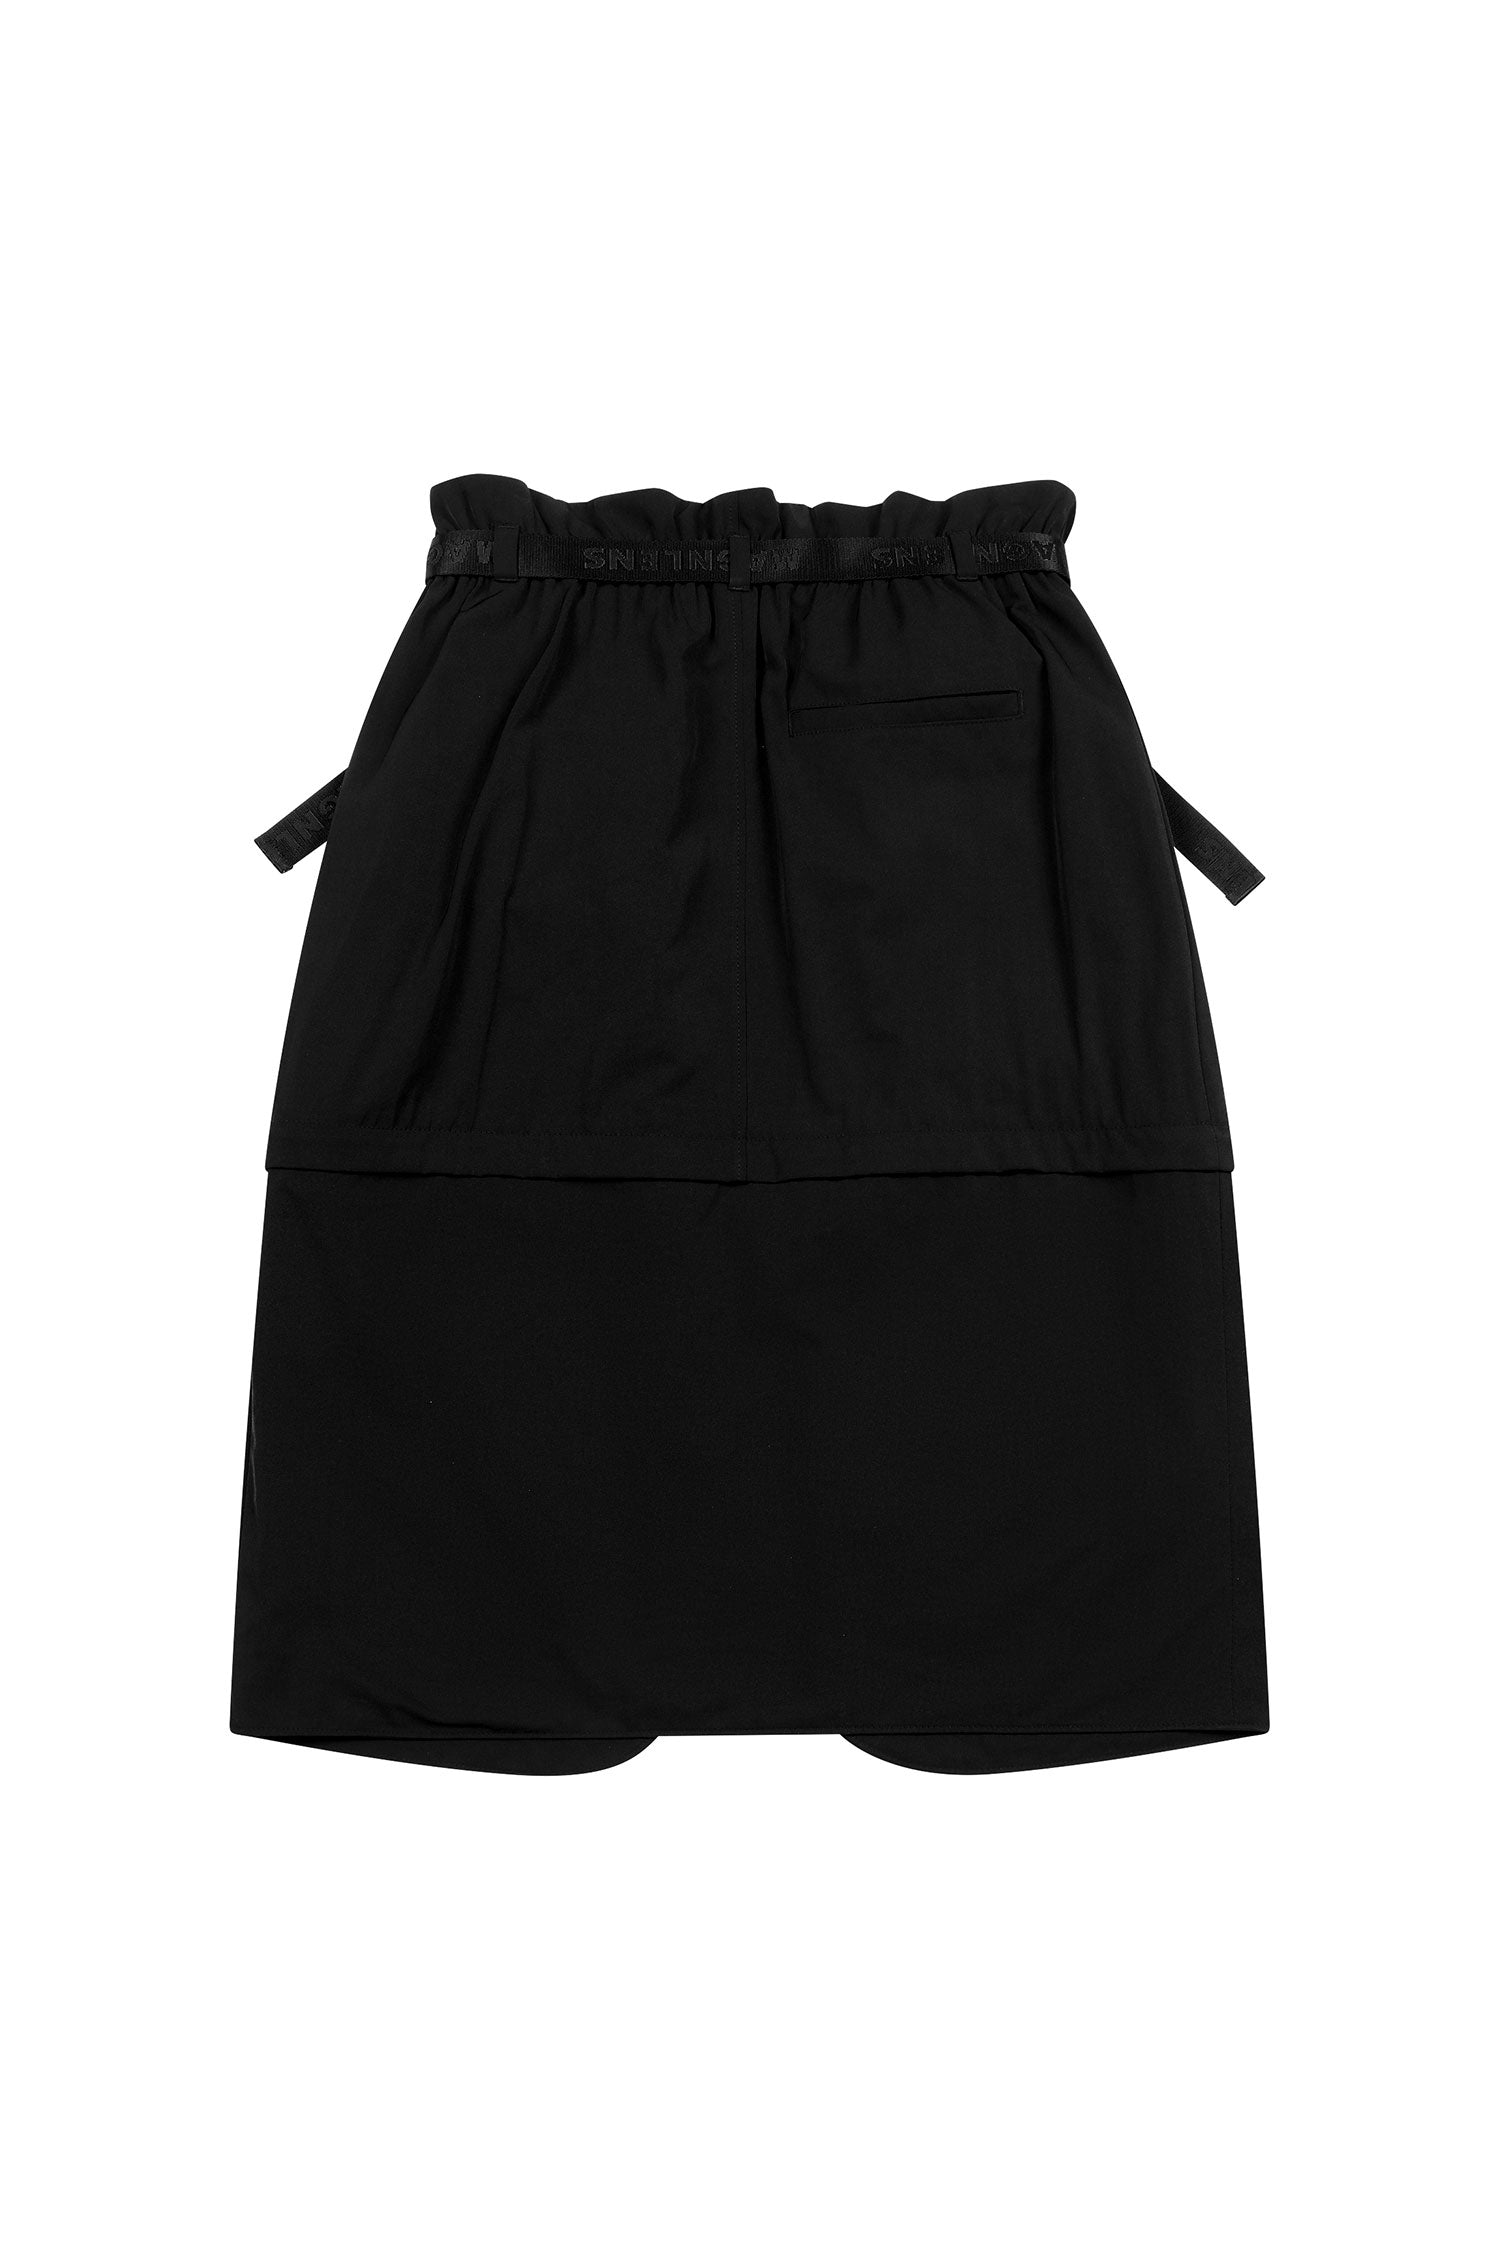 Tashland Convertible Skirt